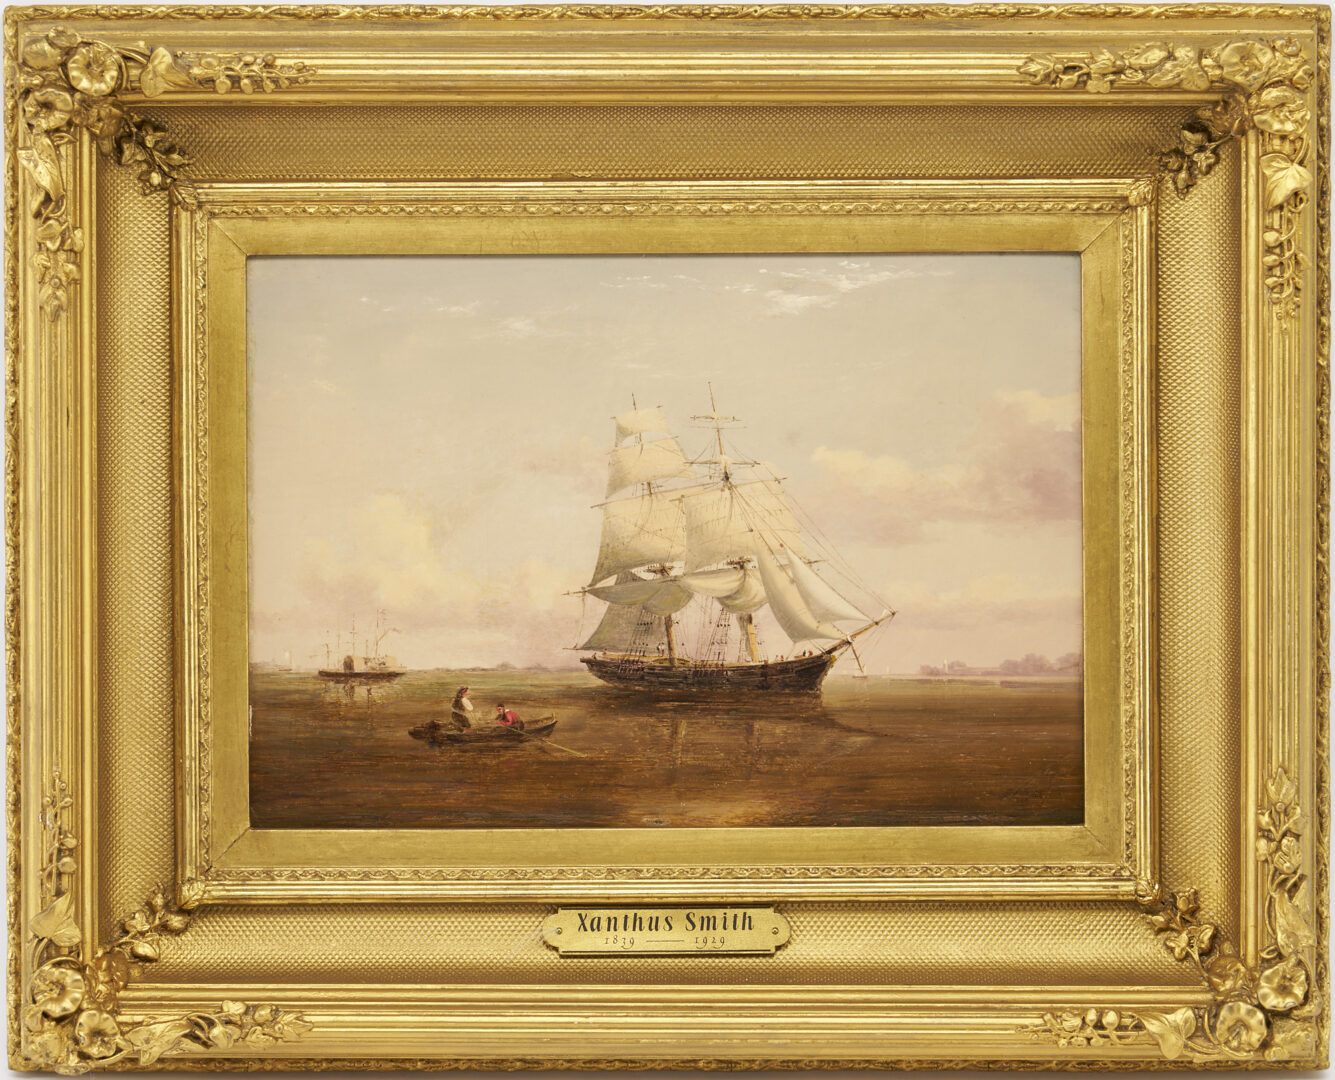 Lot 539: Xanthus Smith O/B Painting, Brig, Outward Bound, Hampton Roads VA 1865